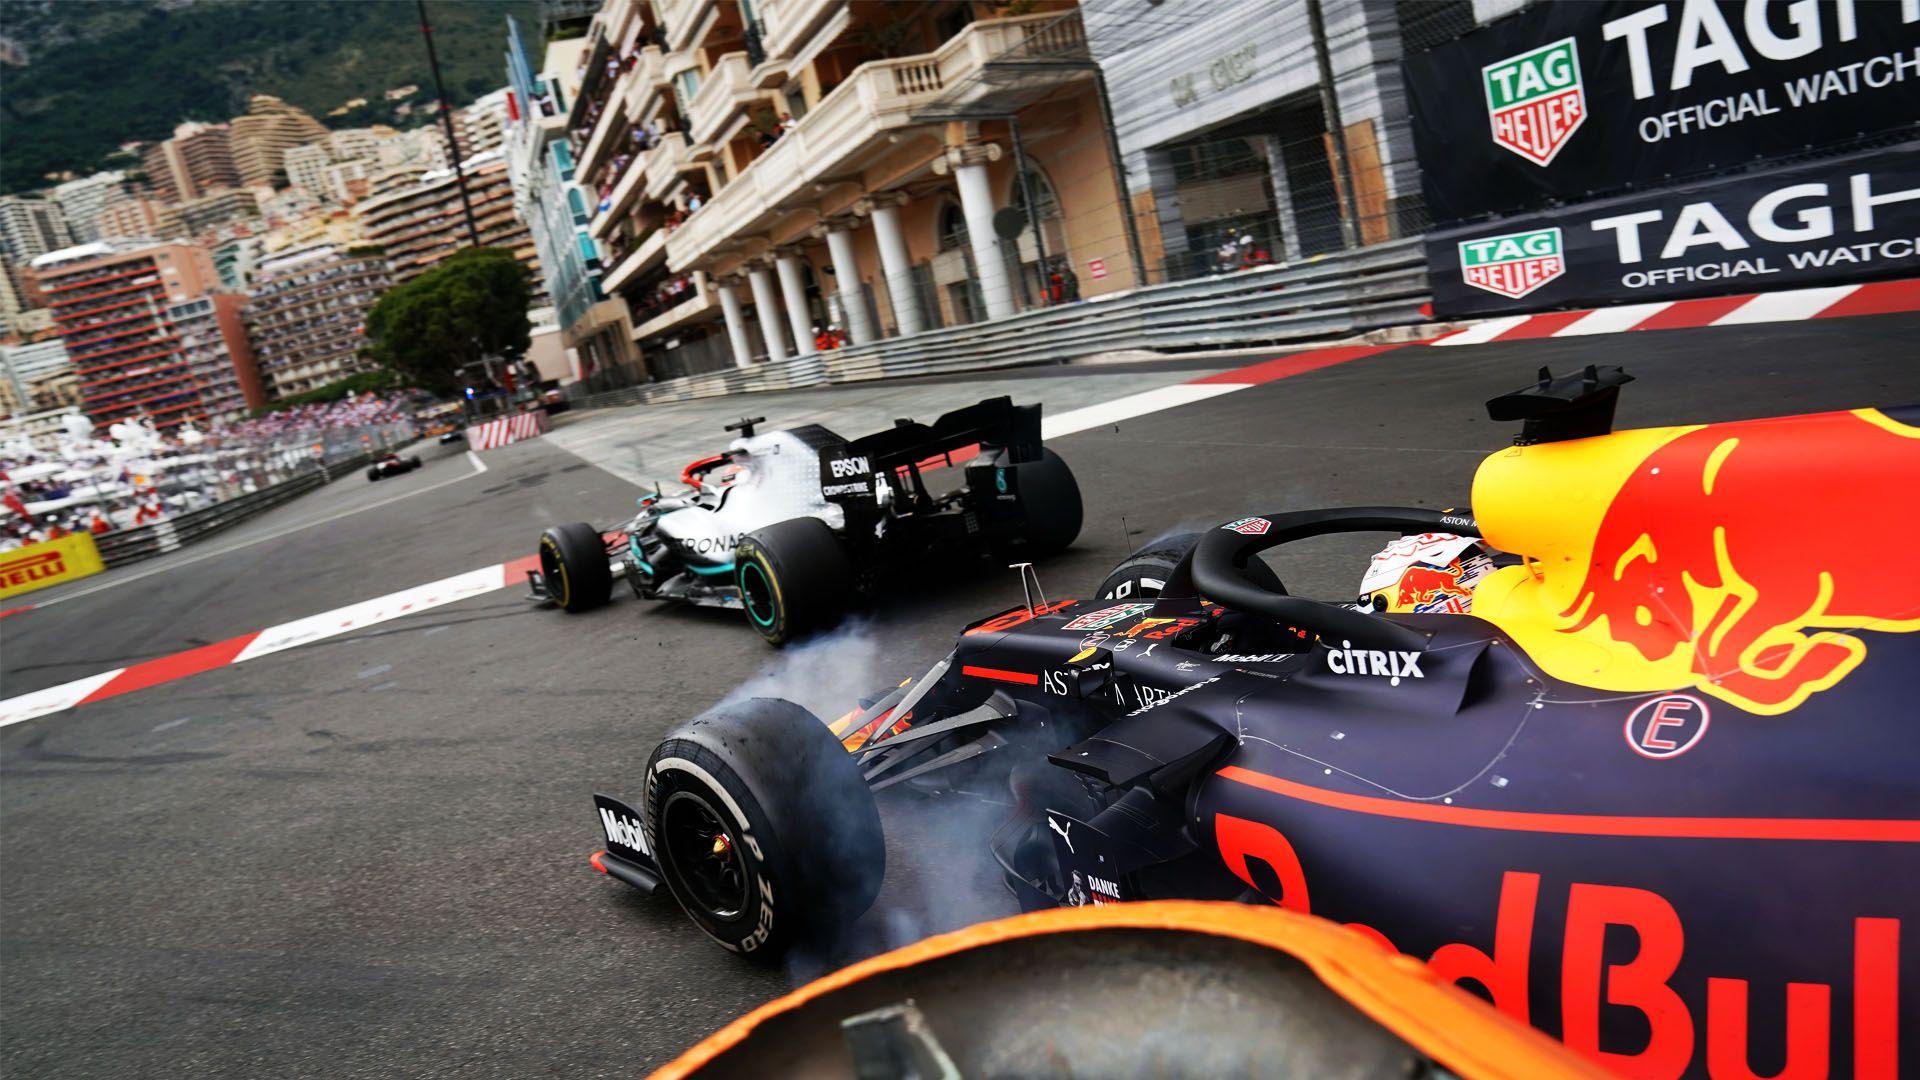 F1 Monaco Wallpapers Top Free F1 Monaco Backgrounds WallpaperAccess